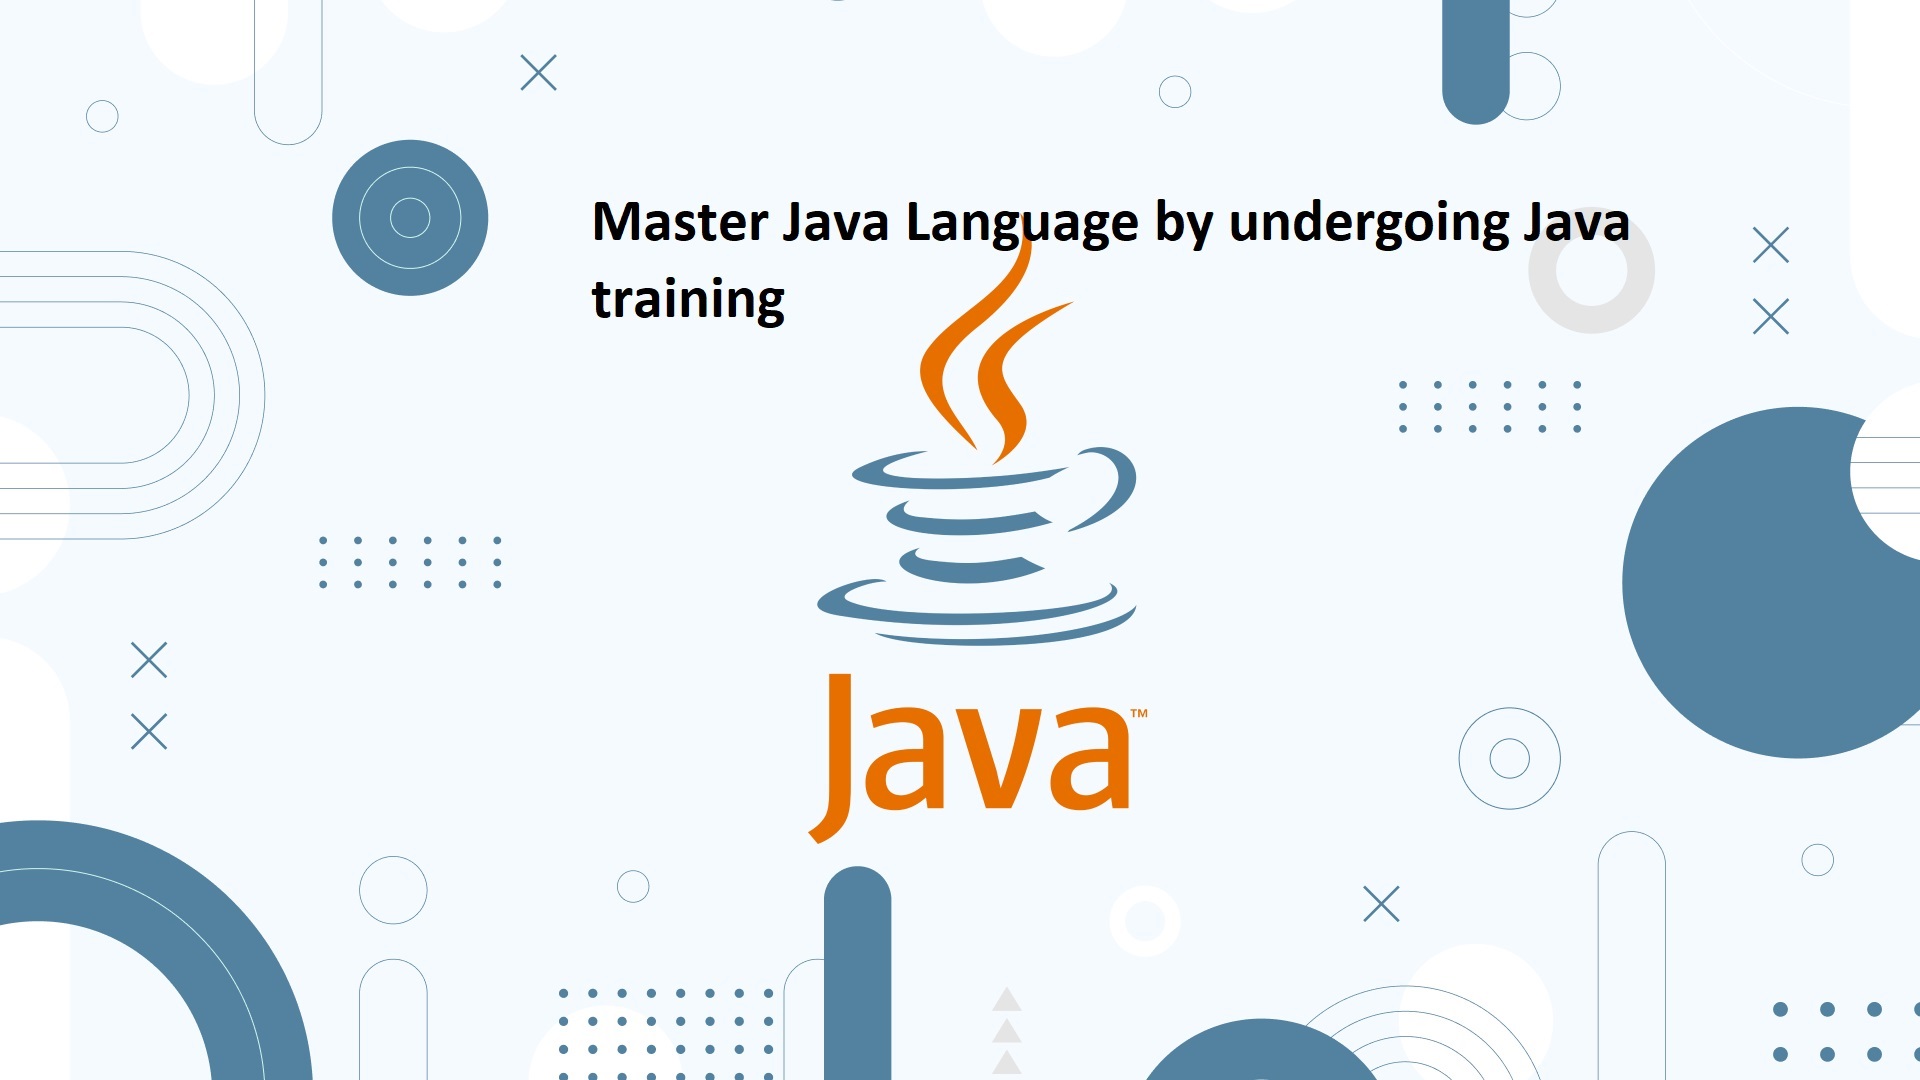 Master Java Language by undergoing Java training